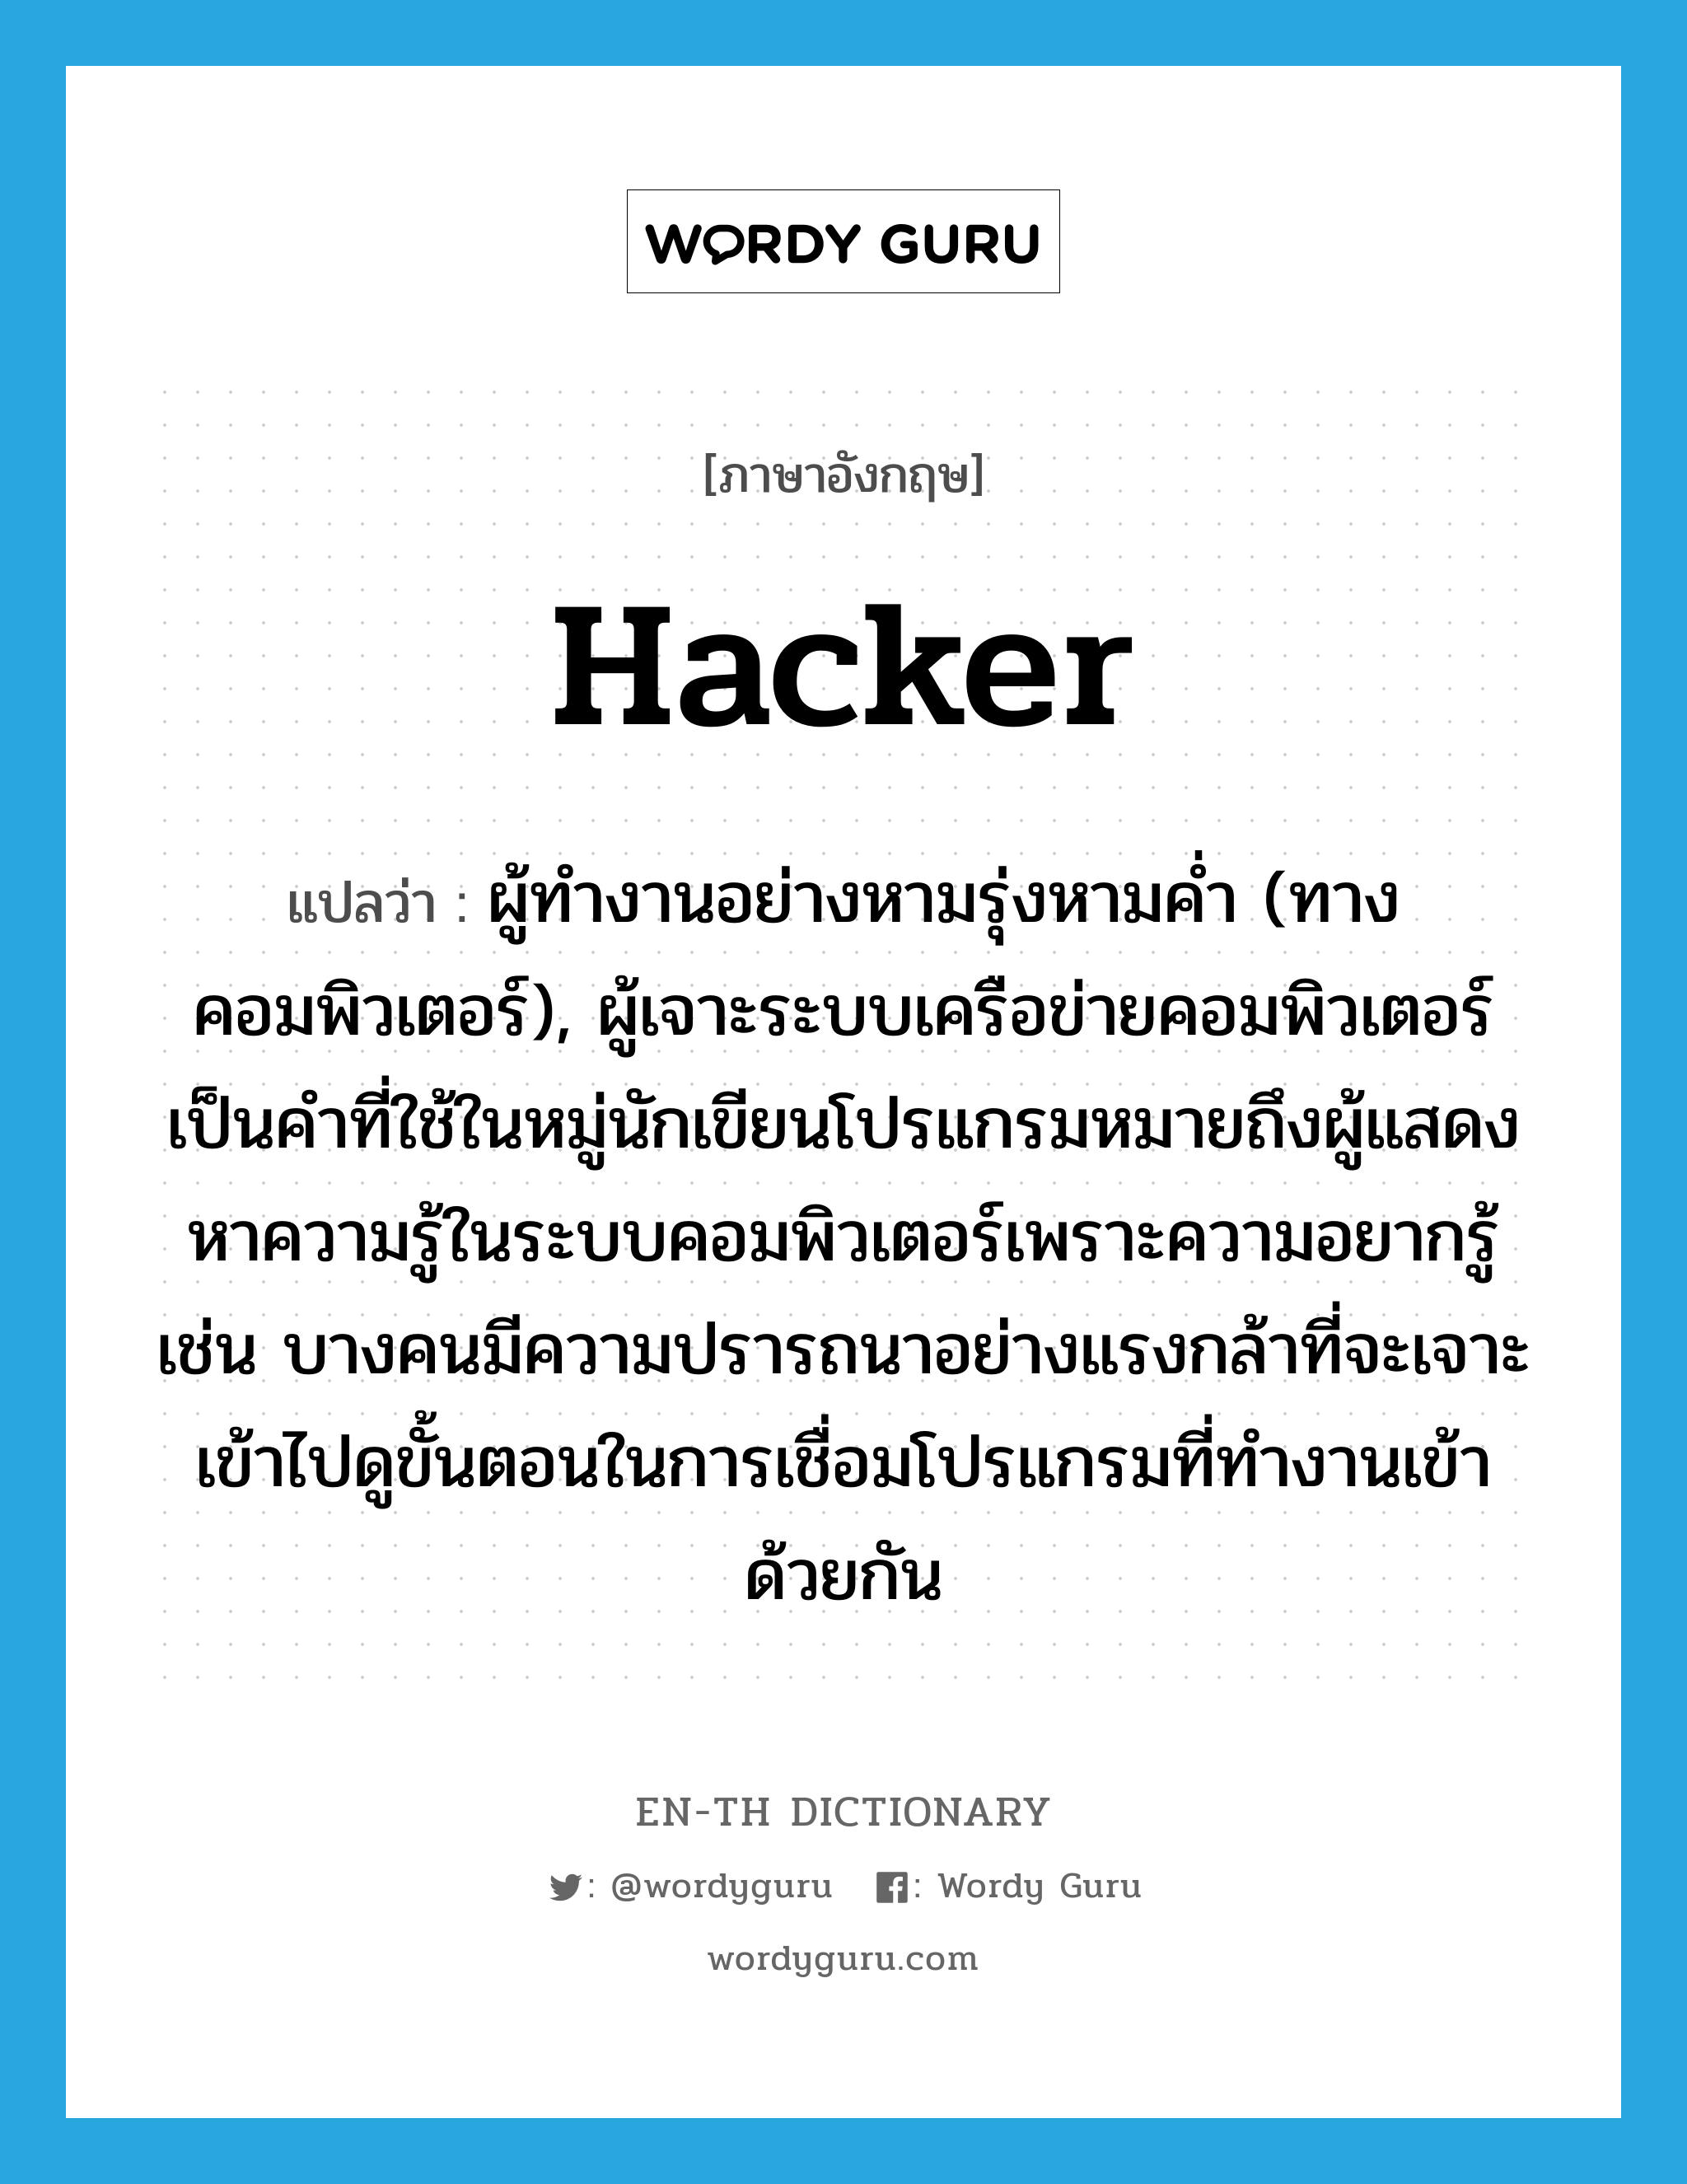 hacker แปลว่า?, คำศัพท์ภาษาอังกฤษ hacker แปลว่า ผู้ทำงานอย่างหามรุ่งหามค่ำ (ทางคอมพิวเตอร์), ผู้เจาะระบบเครือข่ายคอมพิวเตอร์ เป็นคำที่ใช้ในหมู่นักเขียนโปรแกรมหมายถึงผู้แสดงหาความรู้ในระบบคอมพิวเตอร์เพราะความอยากรู้ เช่น บางคนมีความปรารถนาอย่างแรงกล้าที่จะเจาะเข้าไปดูขั้นตอนในการเชื่อมโปรแกรมที่ทำงานเข้าด้วยกัน ประเภท N หมวด N